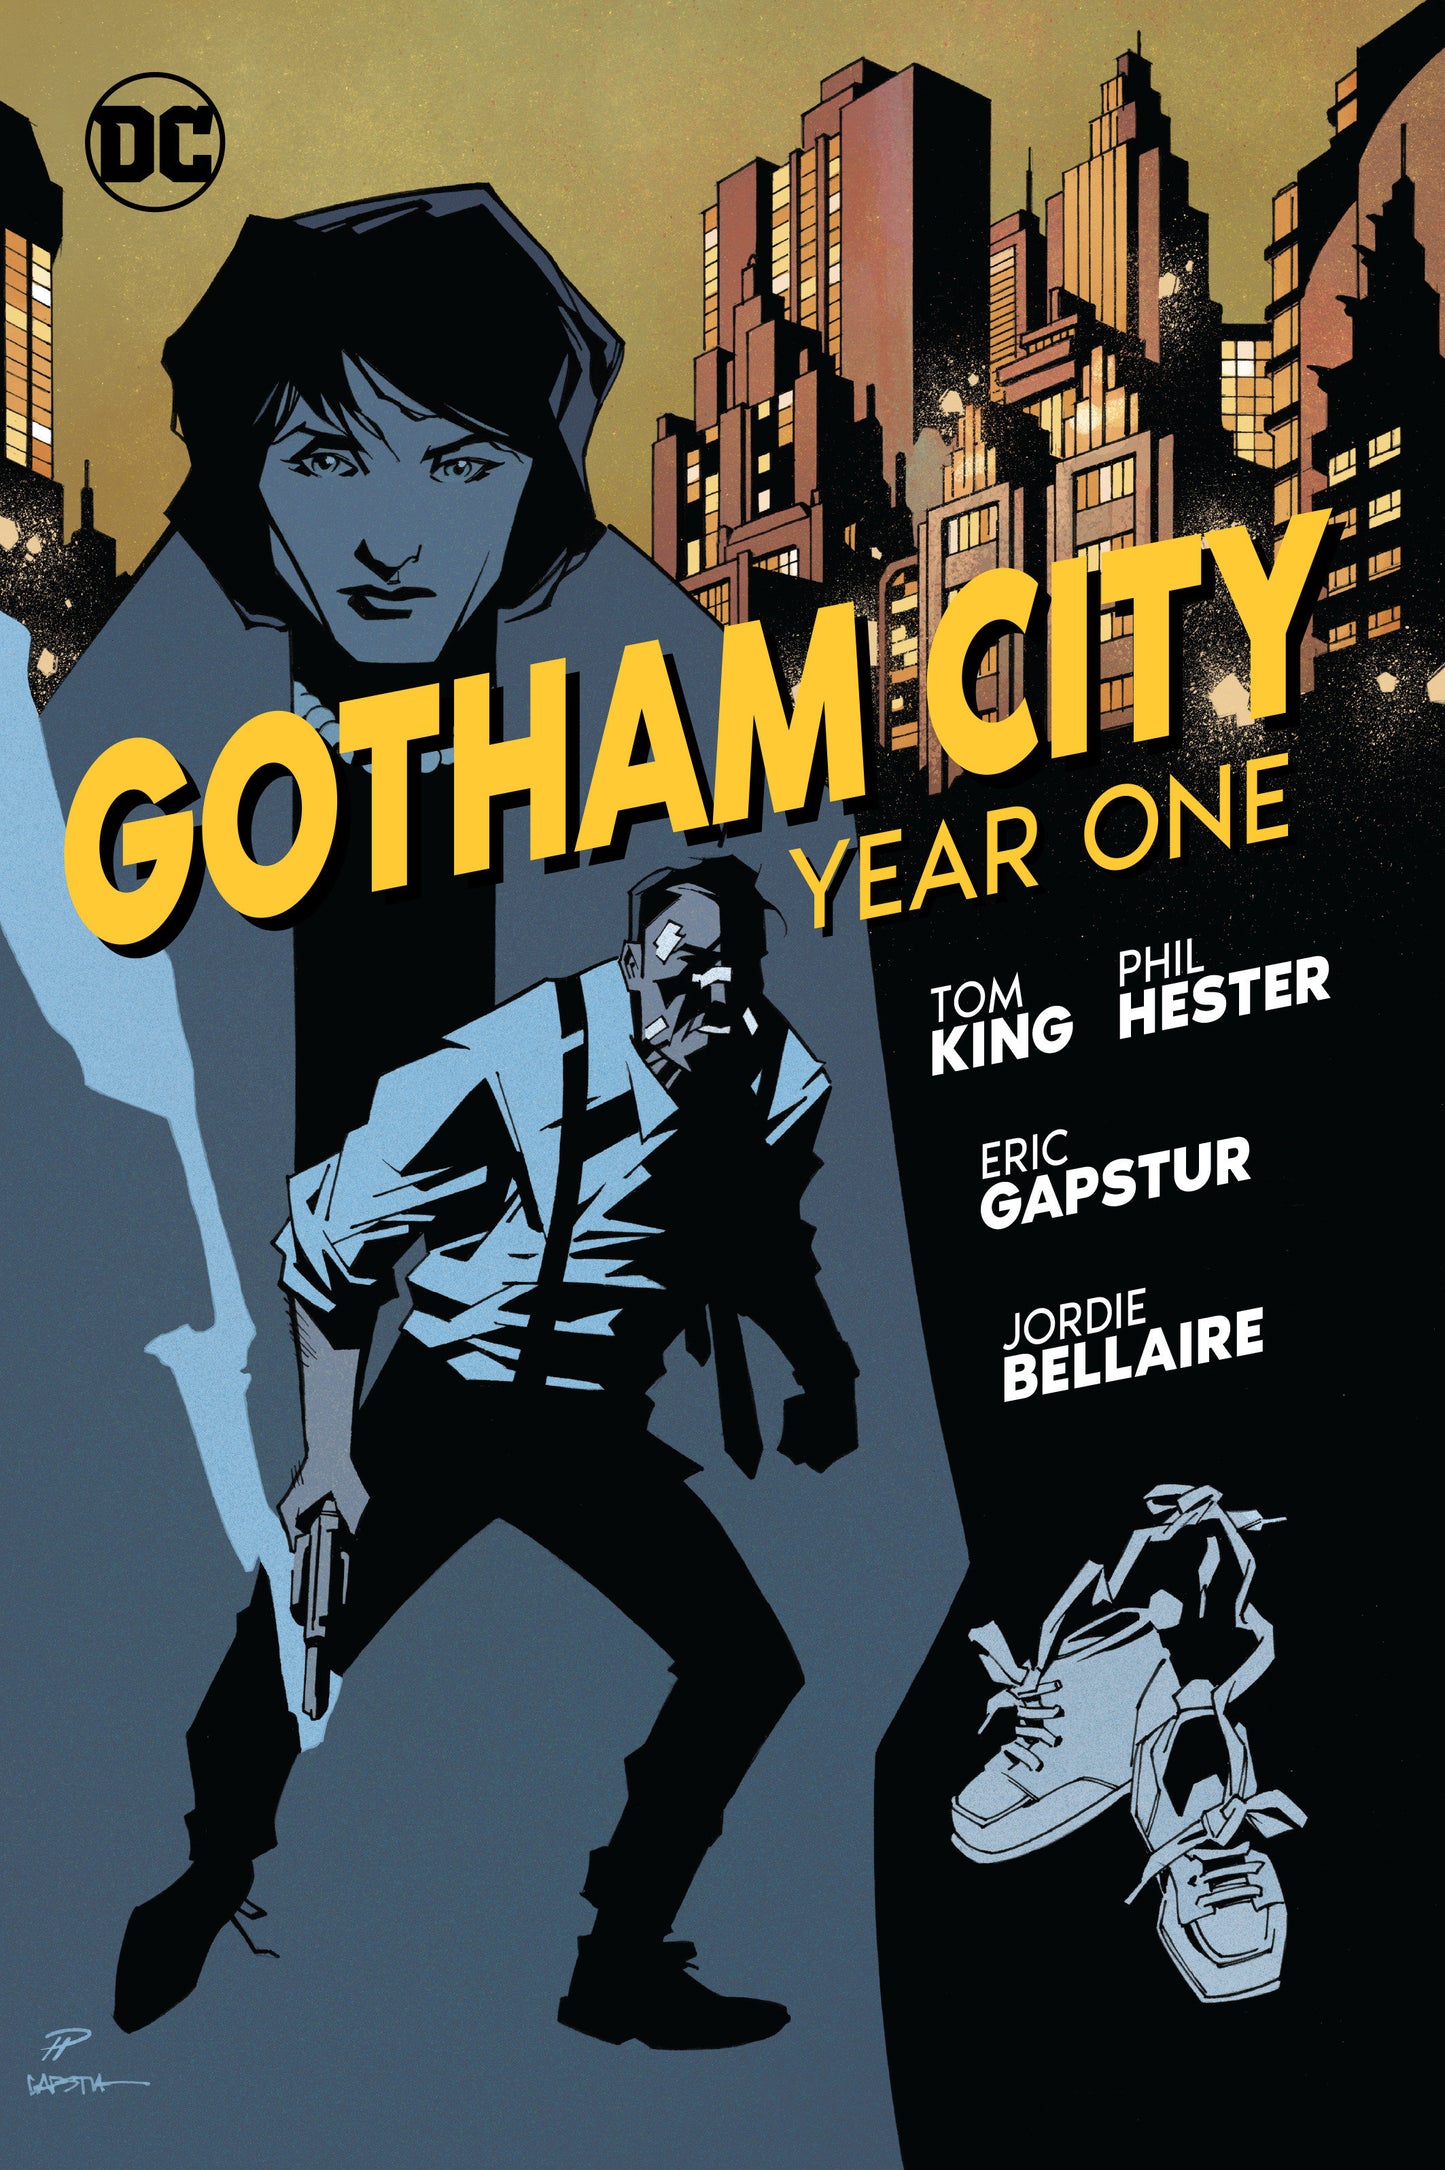 Gotham City Year One by Tom King